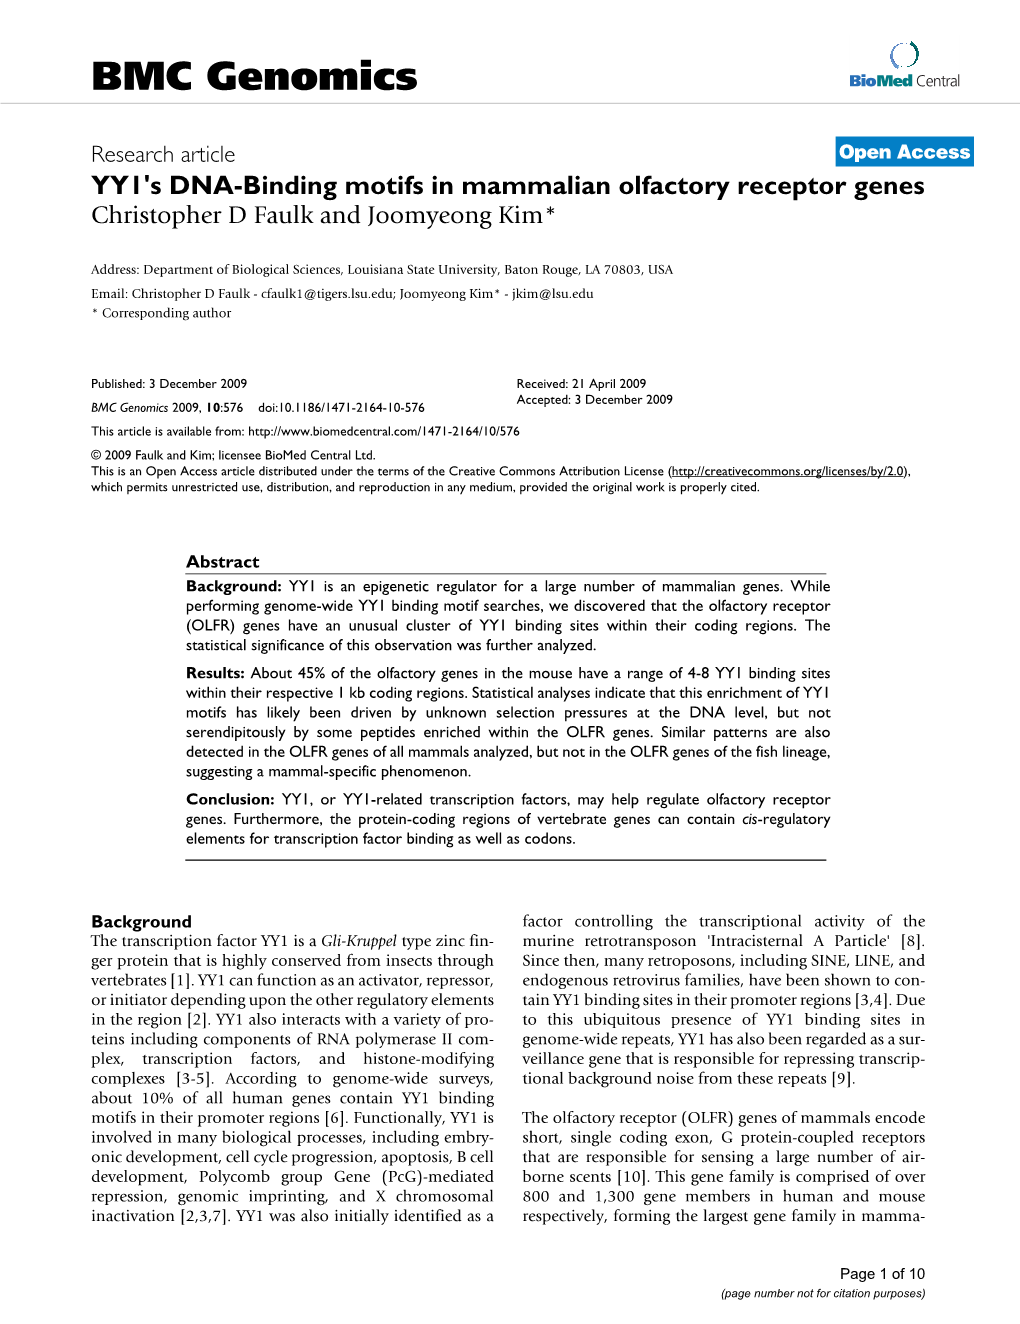 YY1's DNA-Binding Motifs in Mammalian Olfactory Receptor Genes Christopher D Faulk and Joomyeong Kim*